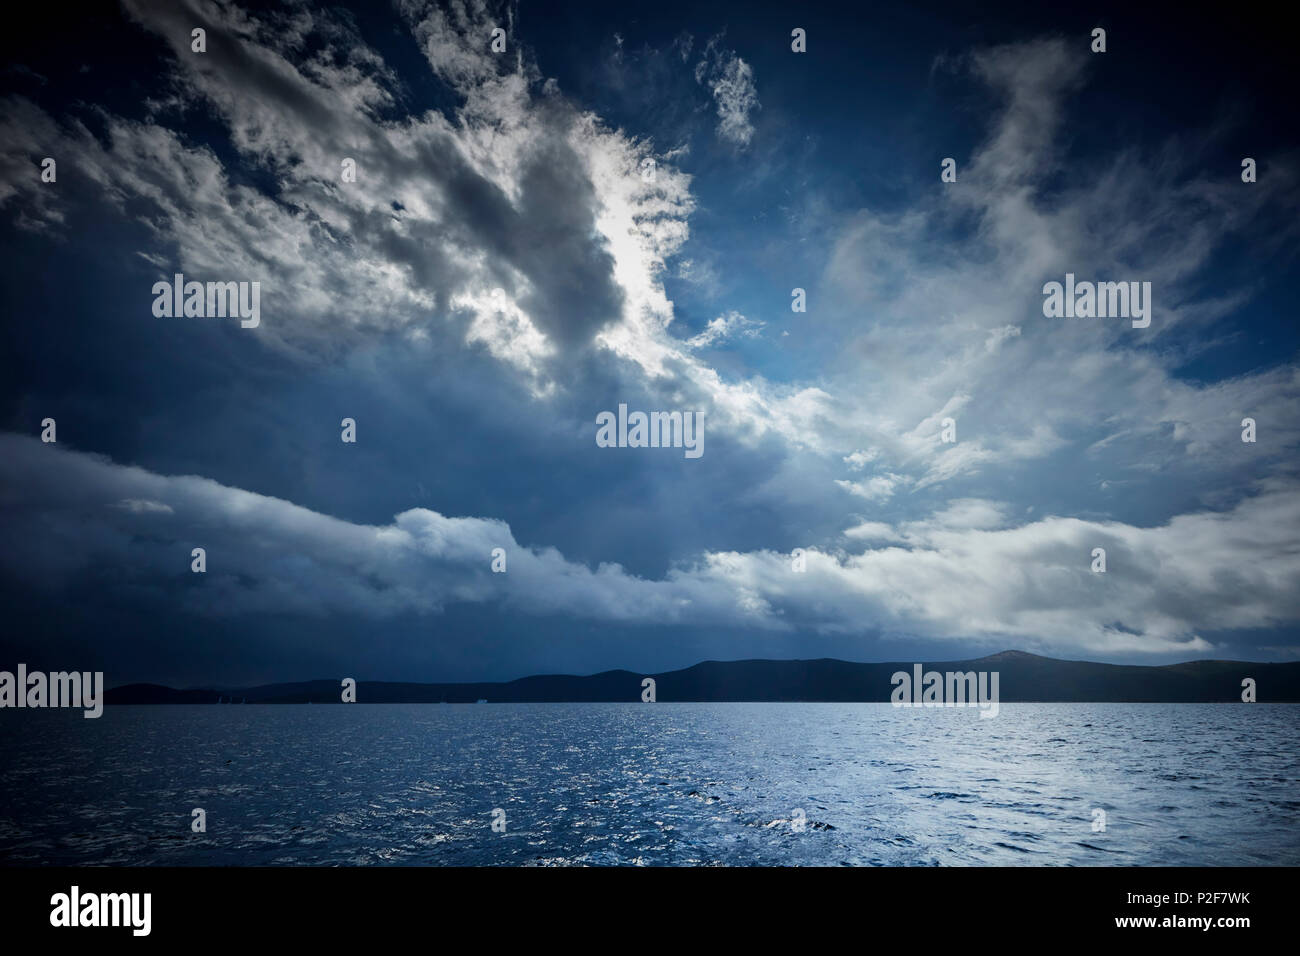 Sailing yachts, arriving storm, Kornati Islands, Adriatic Sea, Croatia Stock Photo